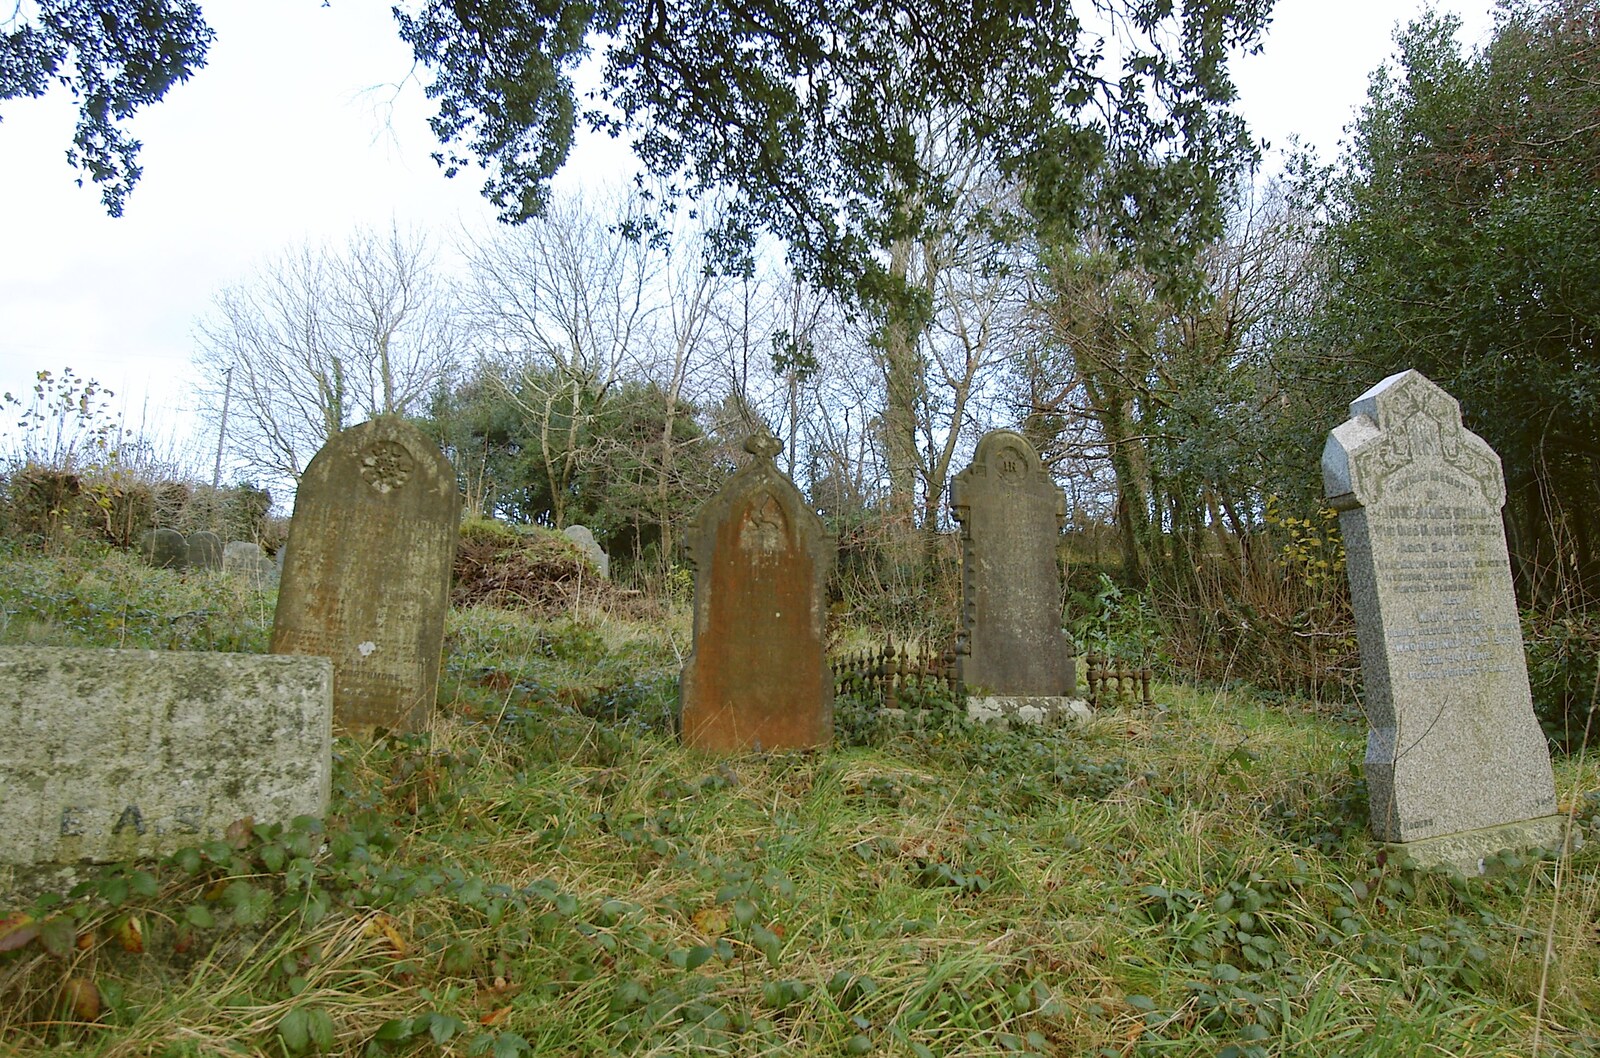 The graveyard in the garden from A Wander Around Hoo Meavy and Burrator, Dartmoor, Devon - 18th December 2005